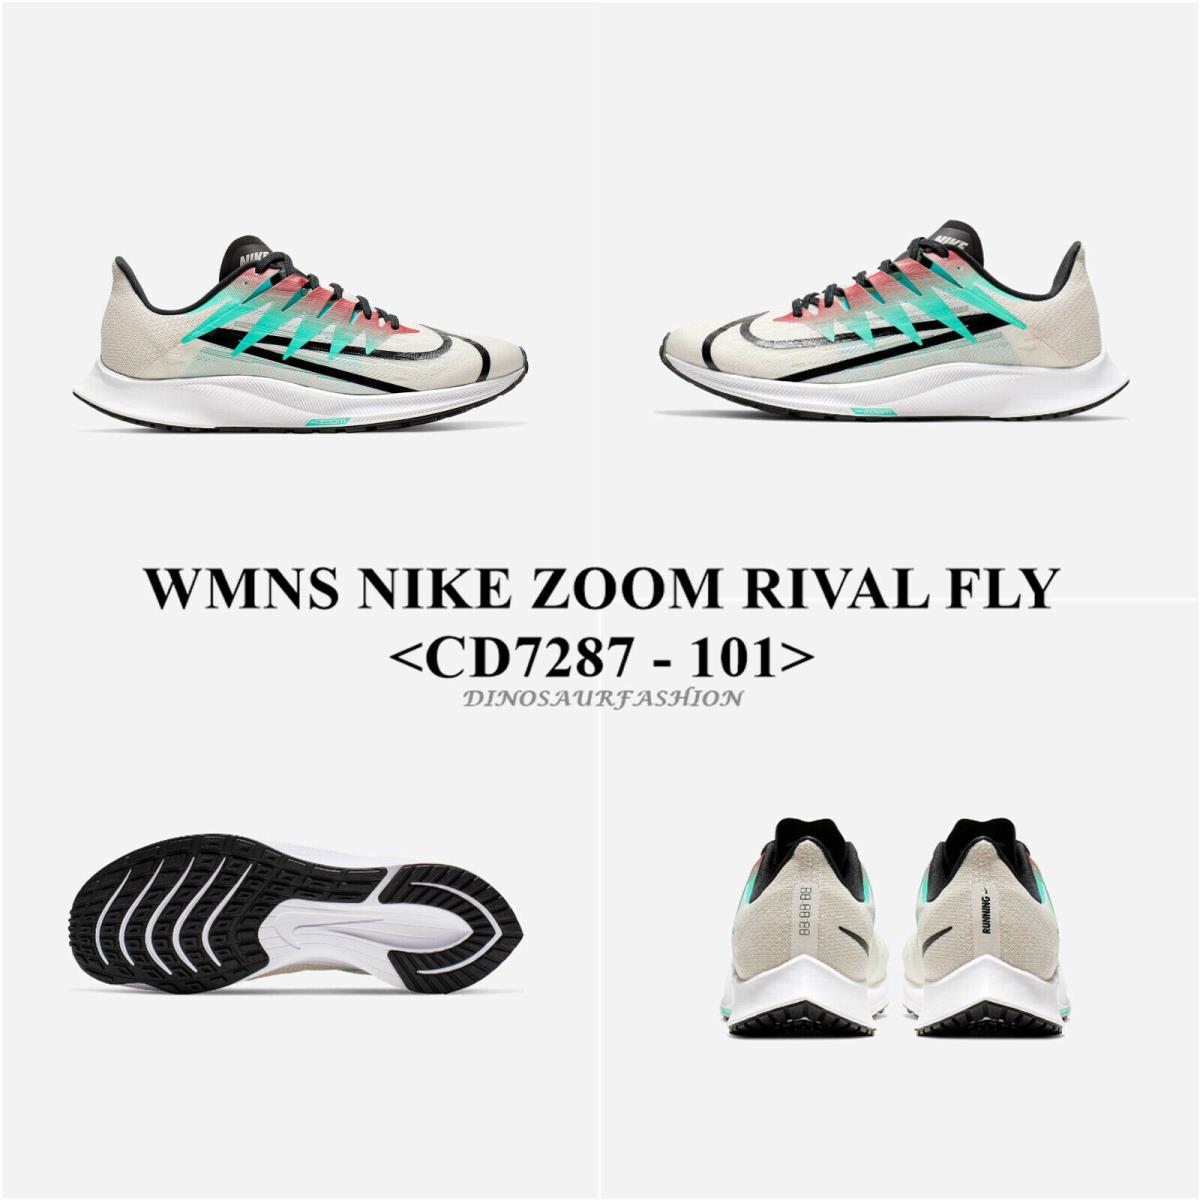 Wmn`s Nike Zoom Rival Fly <CD7287 - 101> Women`s Running/sneaker Shoes W Box